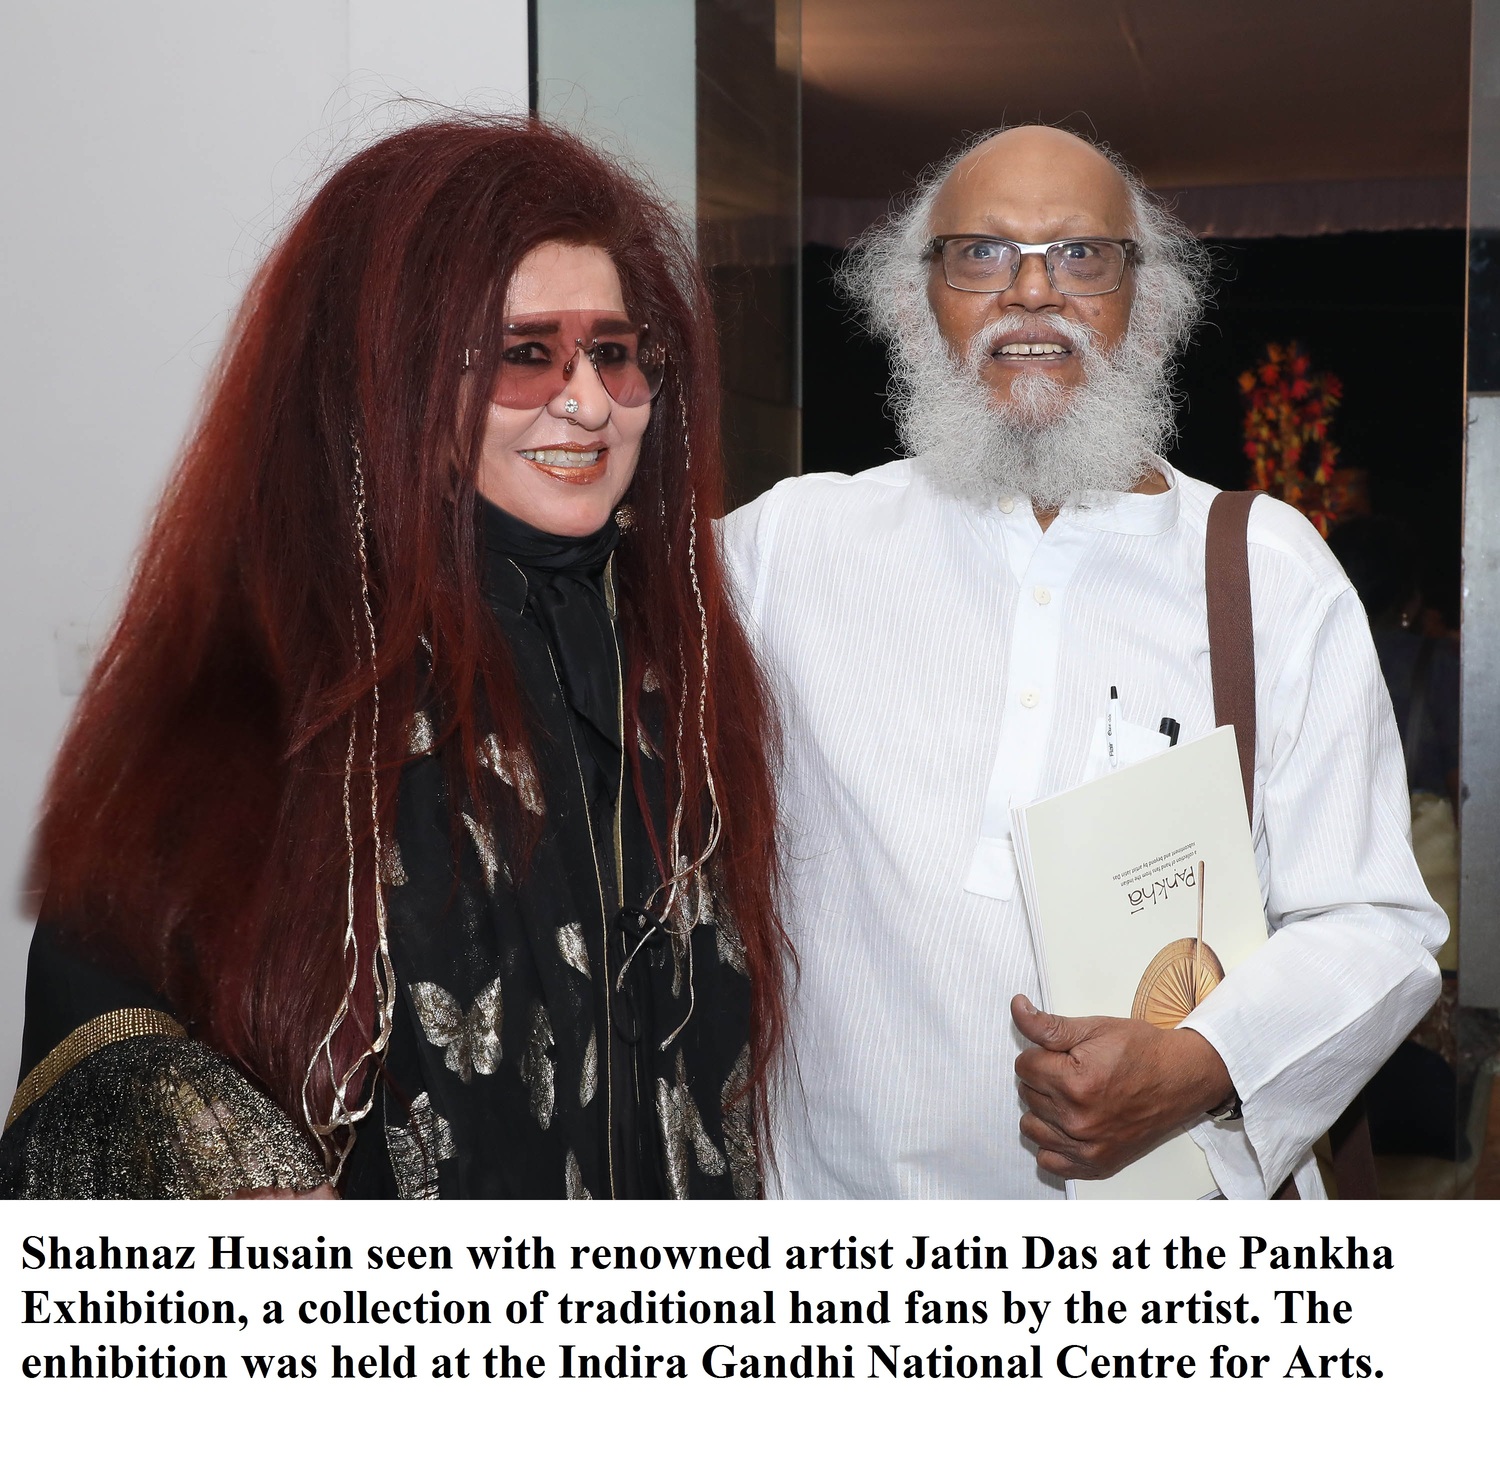 Review: SHAHNAZ HUSAIN ATTENDS ARTIST Jatin Das' Pankha Exhibit 